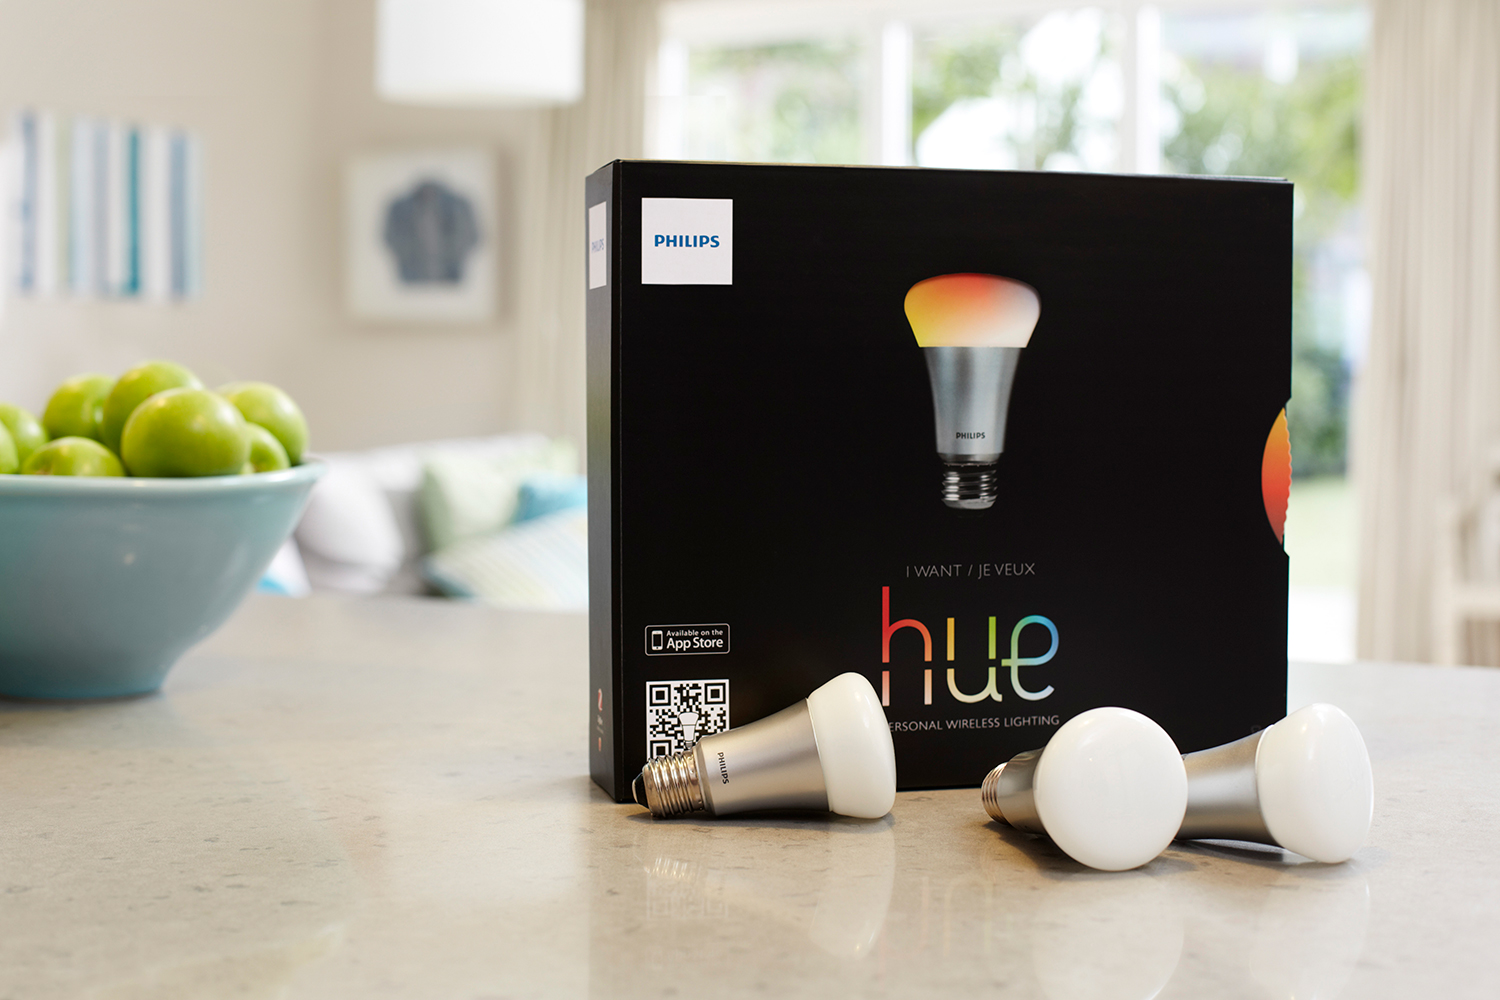 Philips Hue light bulbs.